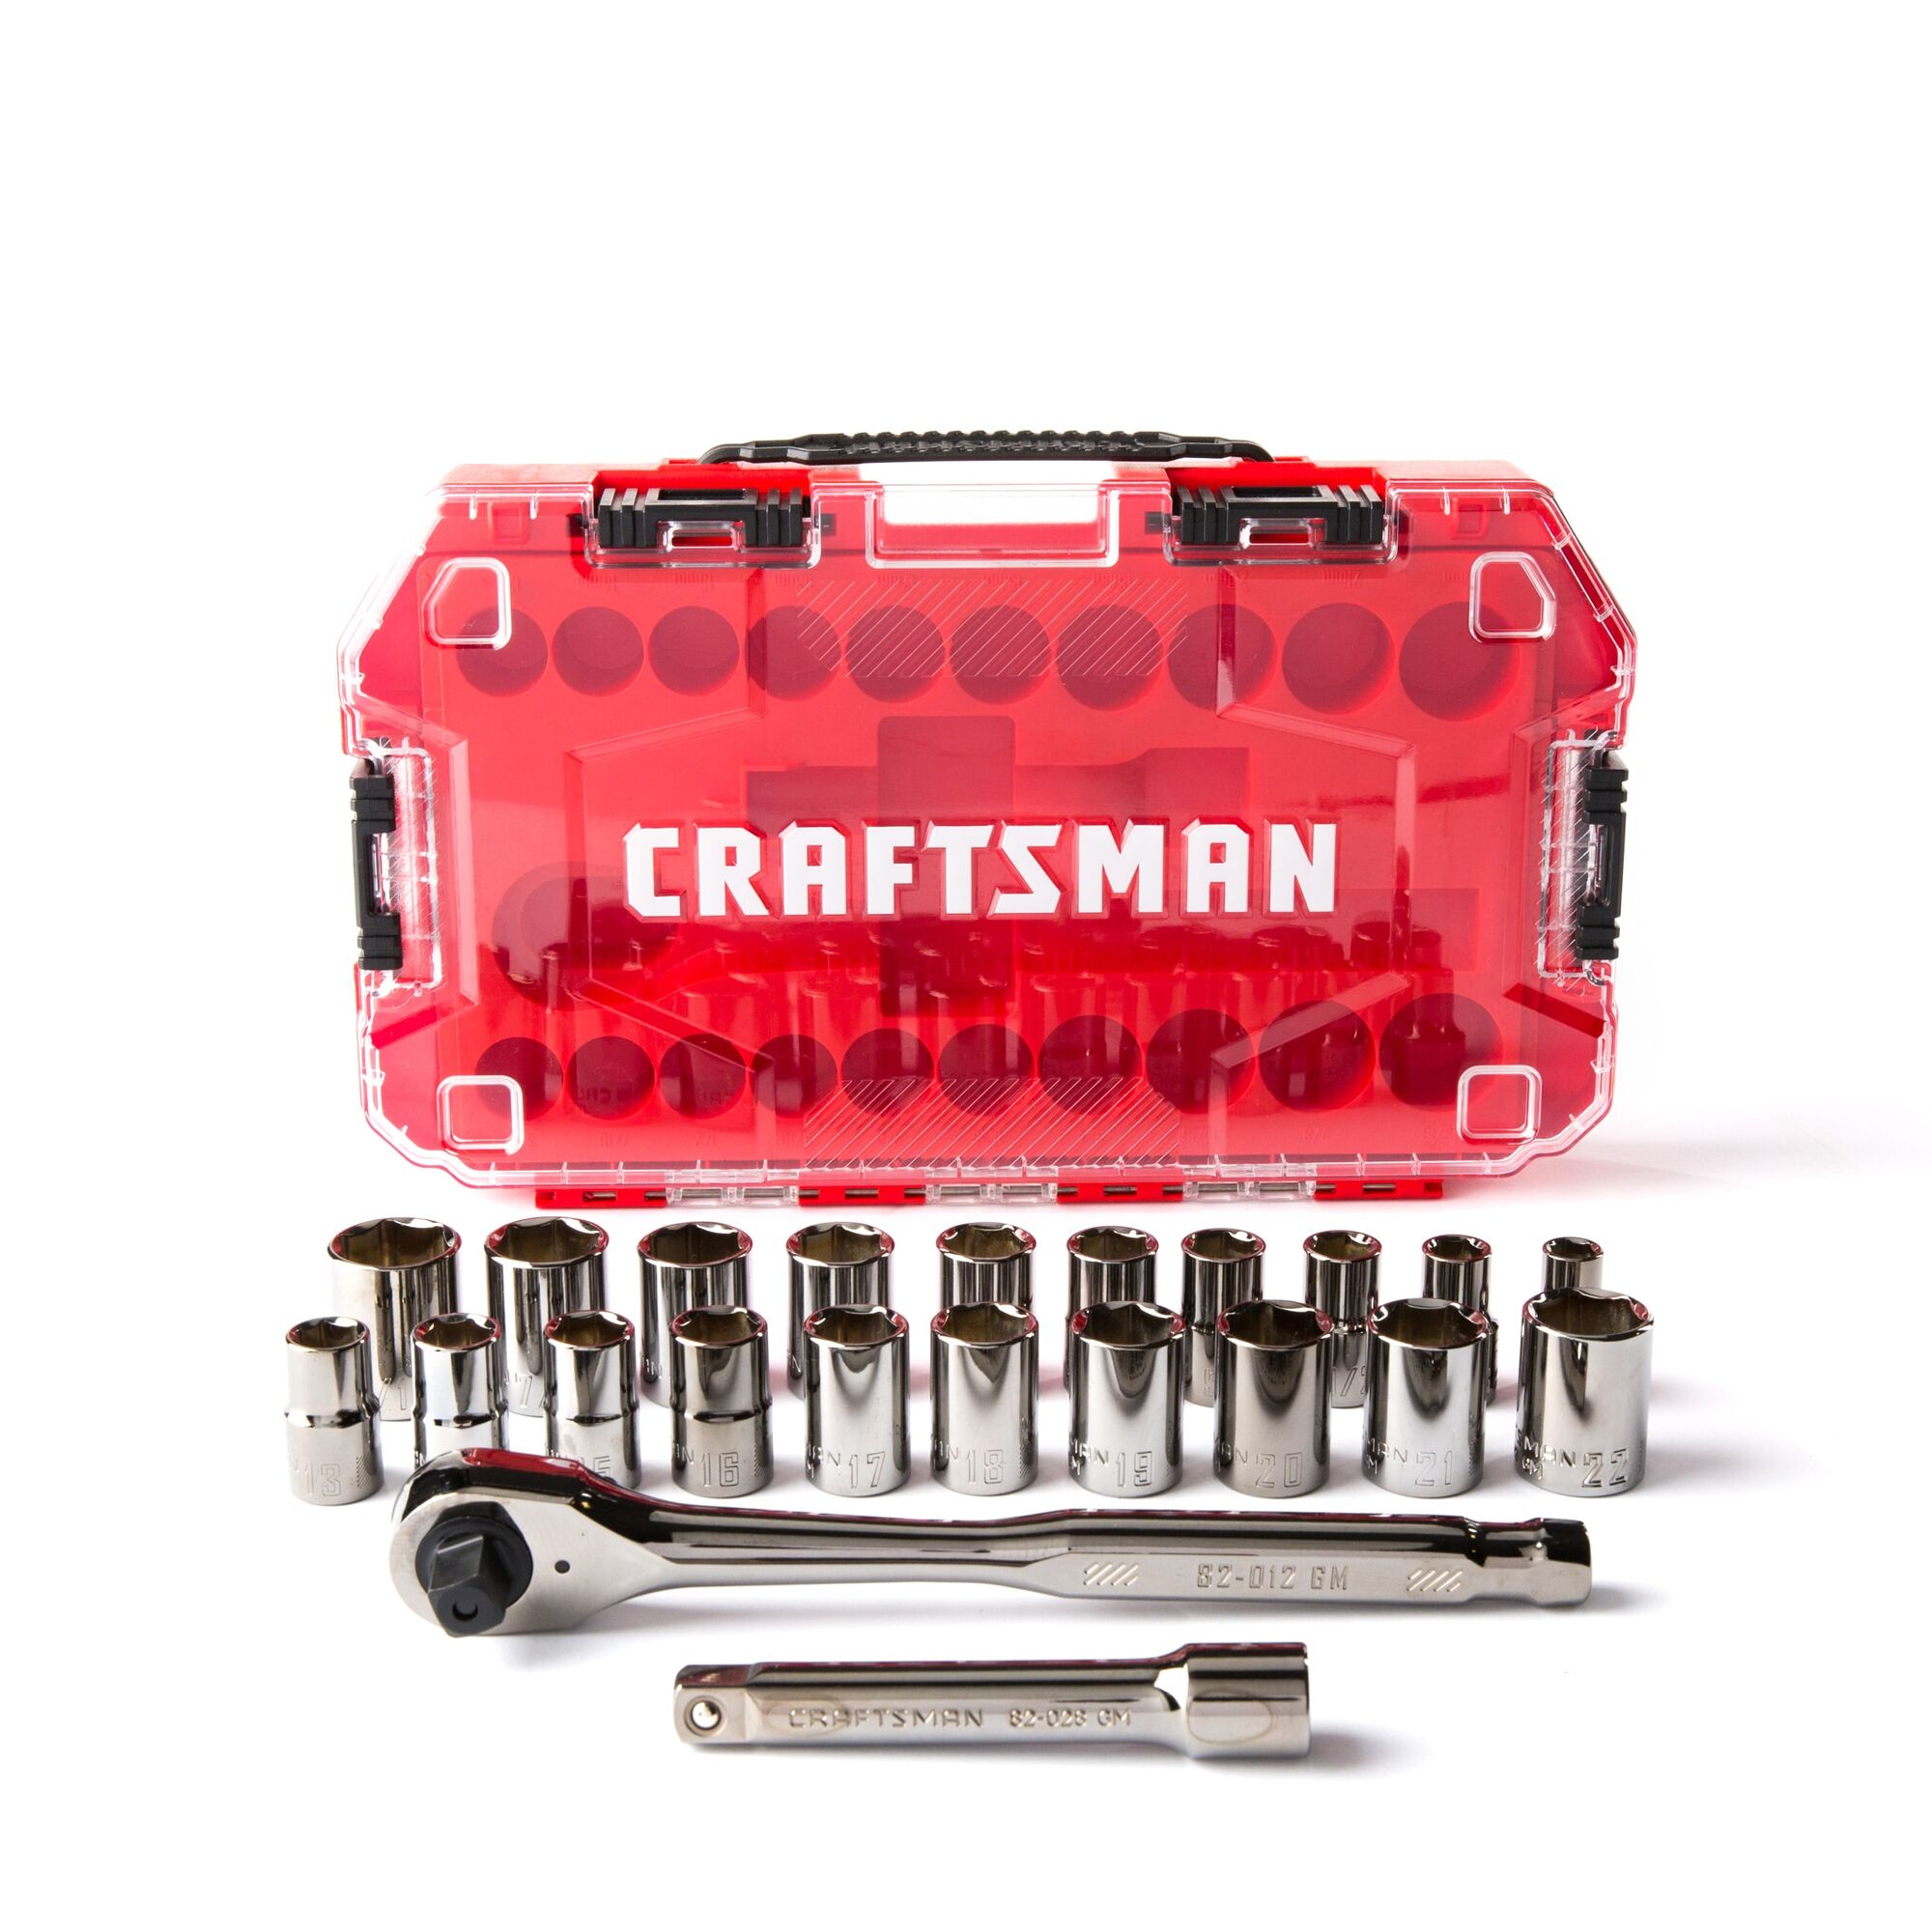 View of CRAFTSMAN Mechanics Tool Set on white background